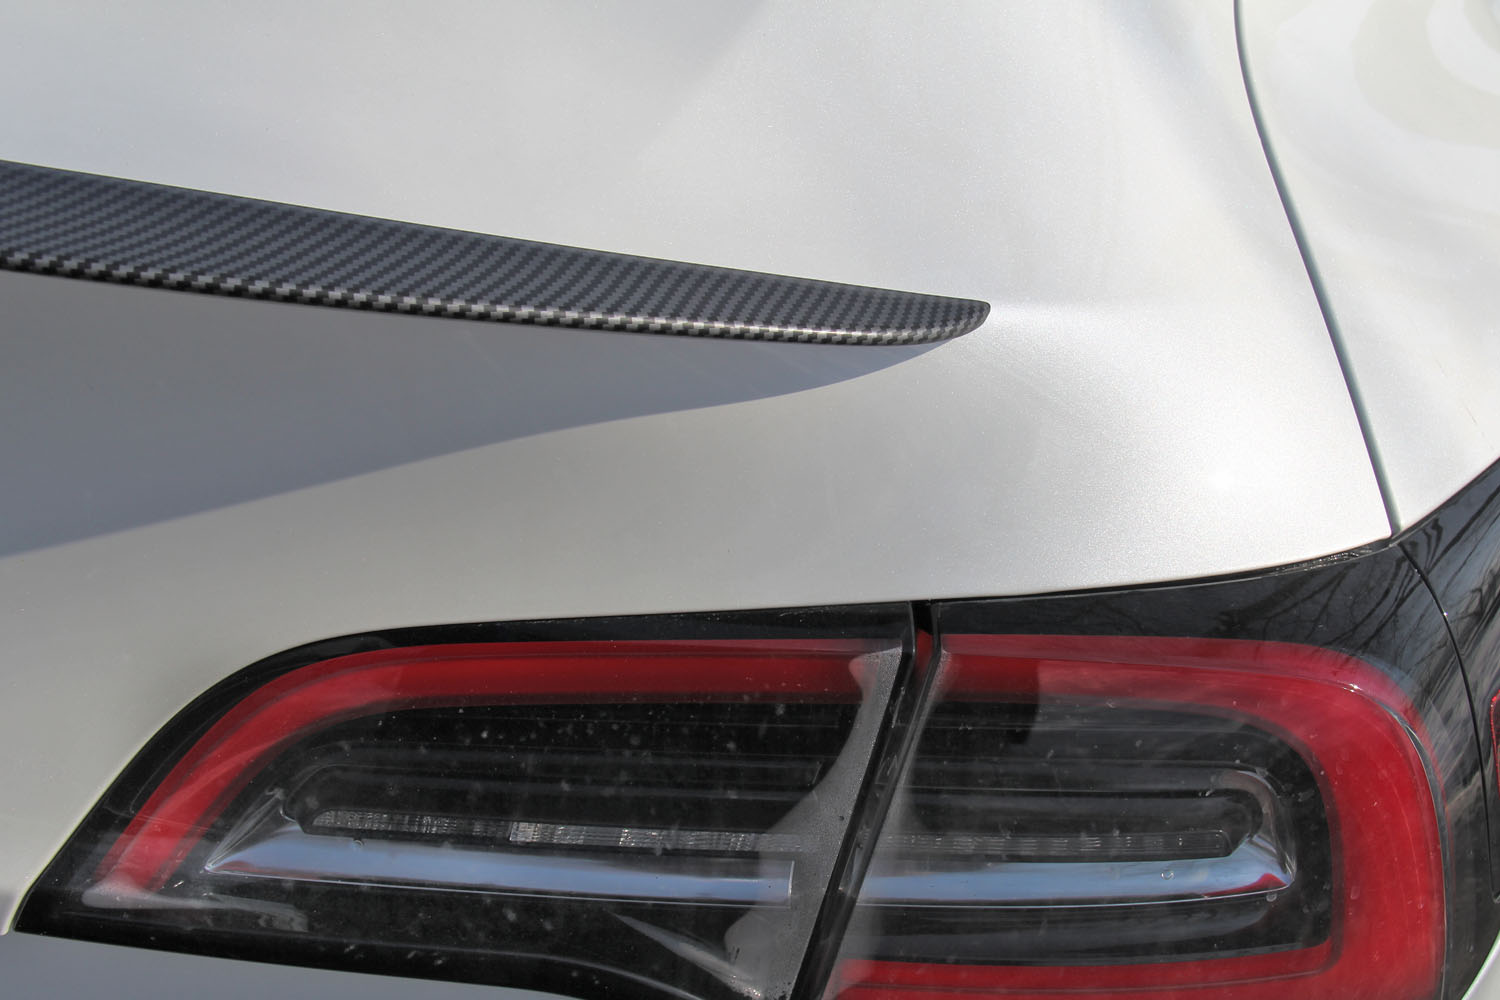 2022 For Tesla Model Y/ Model 3 Spoiler Carbon Type Performance